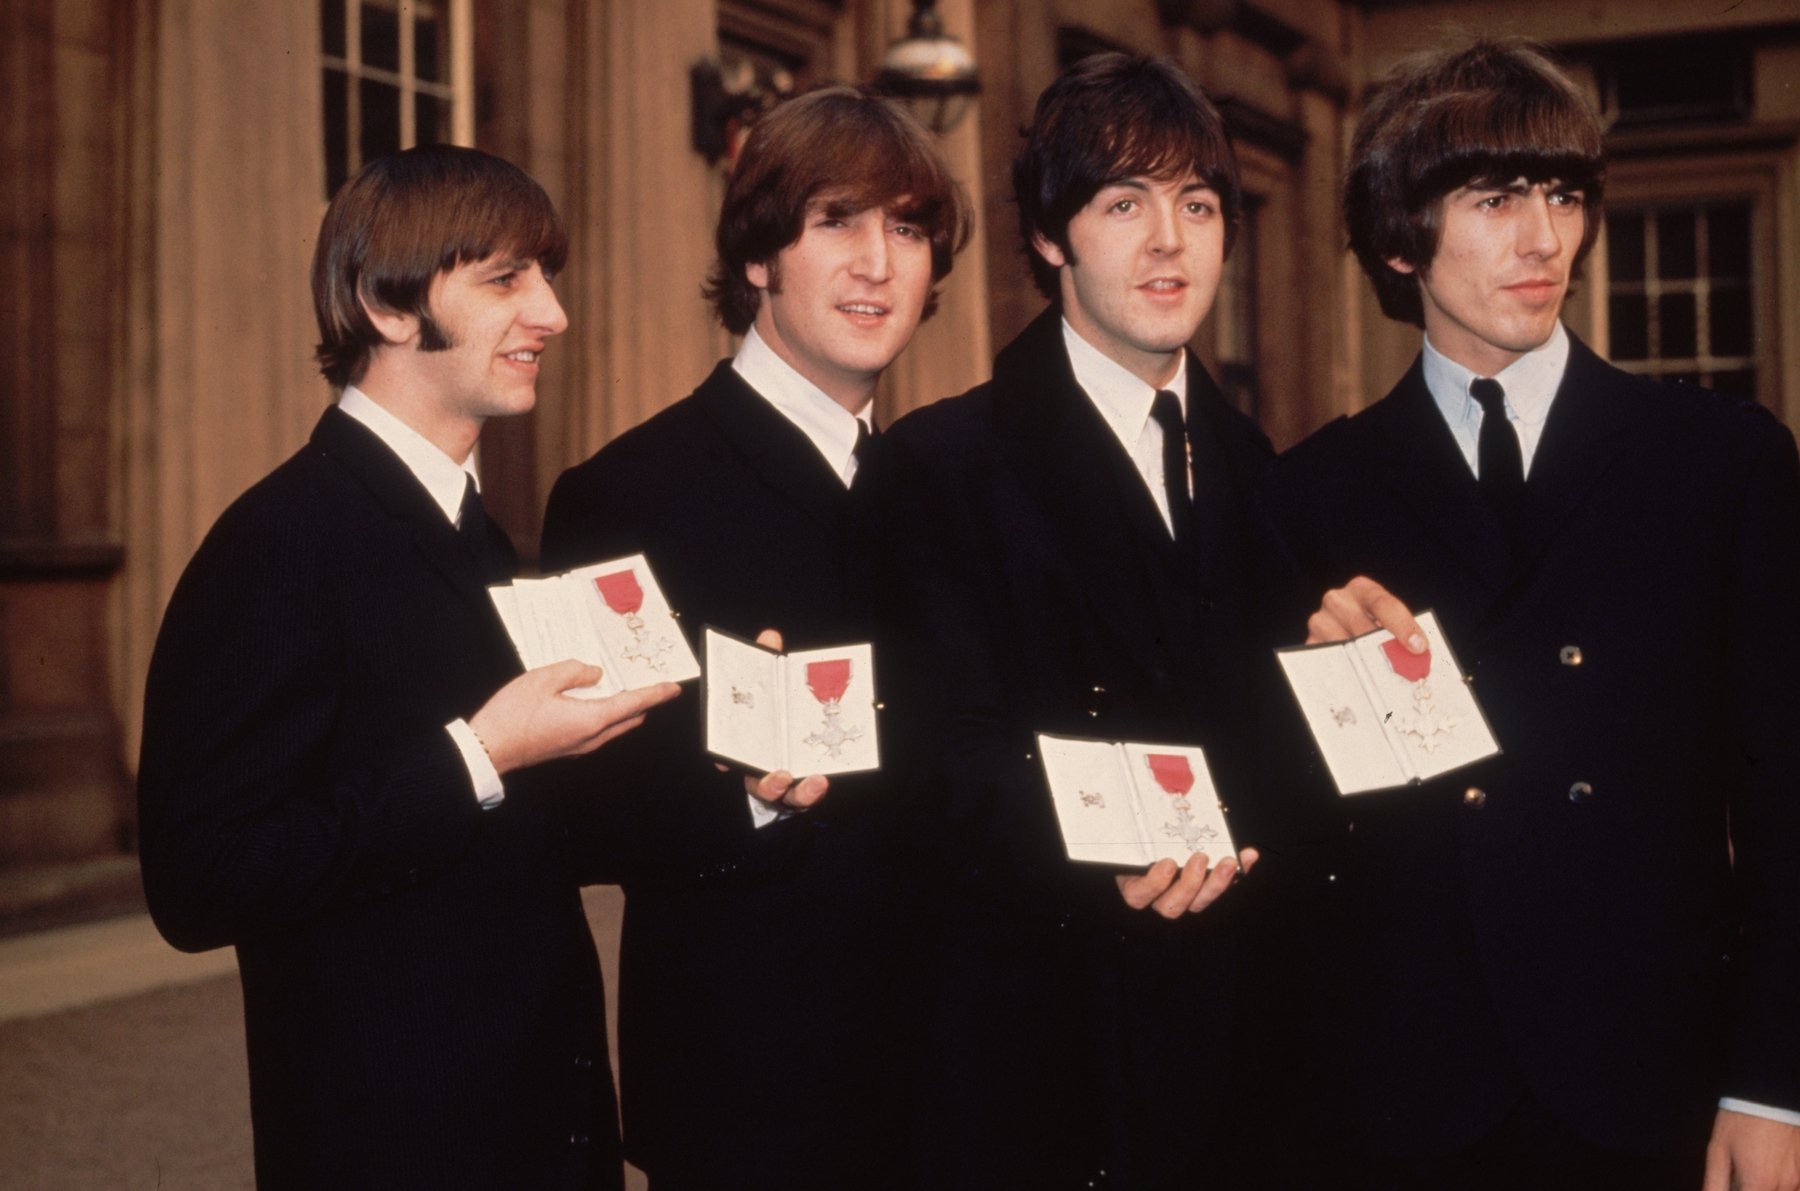 British pop group The Beatles (Ringo Starr, John Lennon, Paul McCartney, and George Harrison)